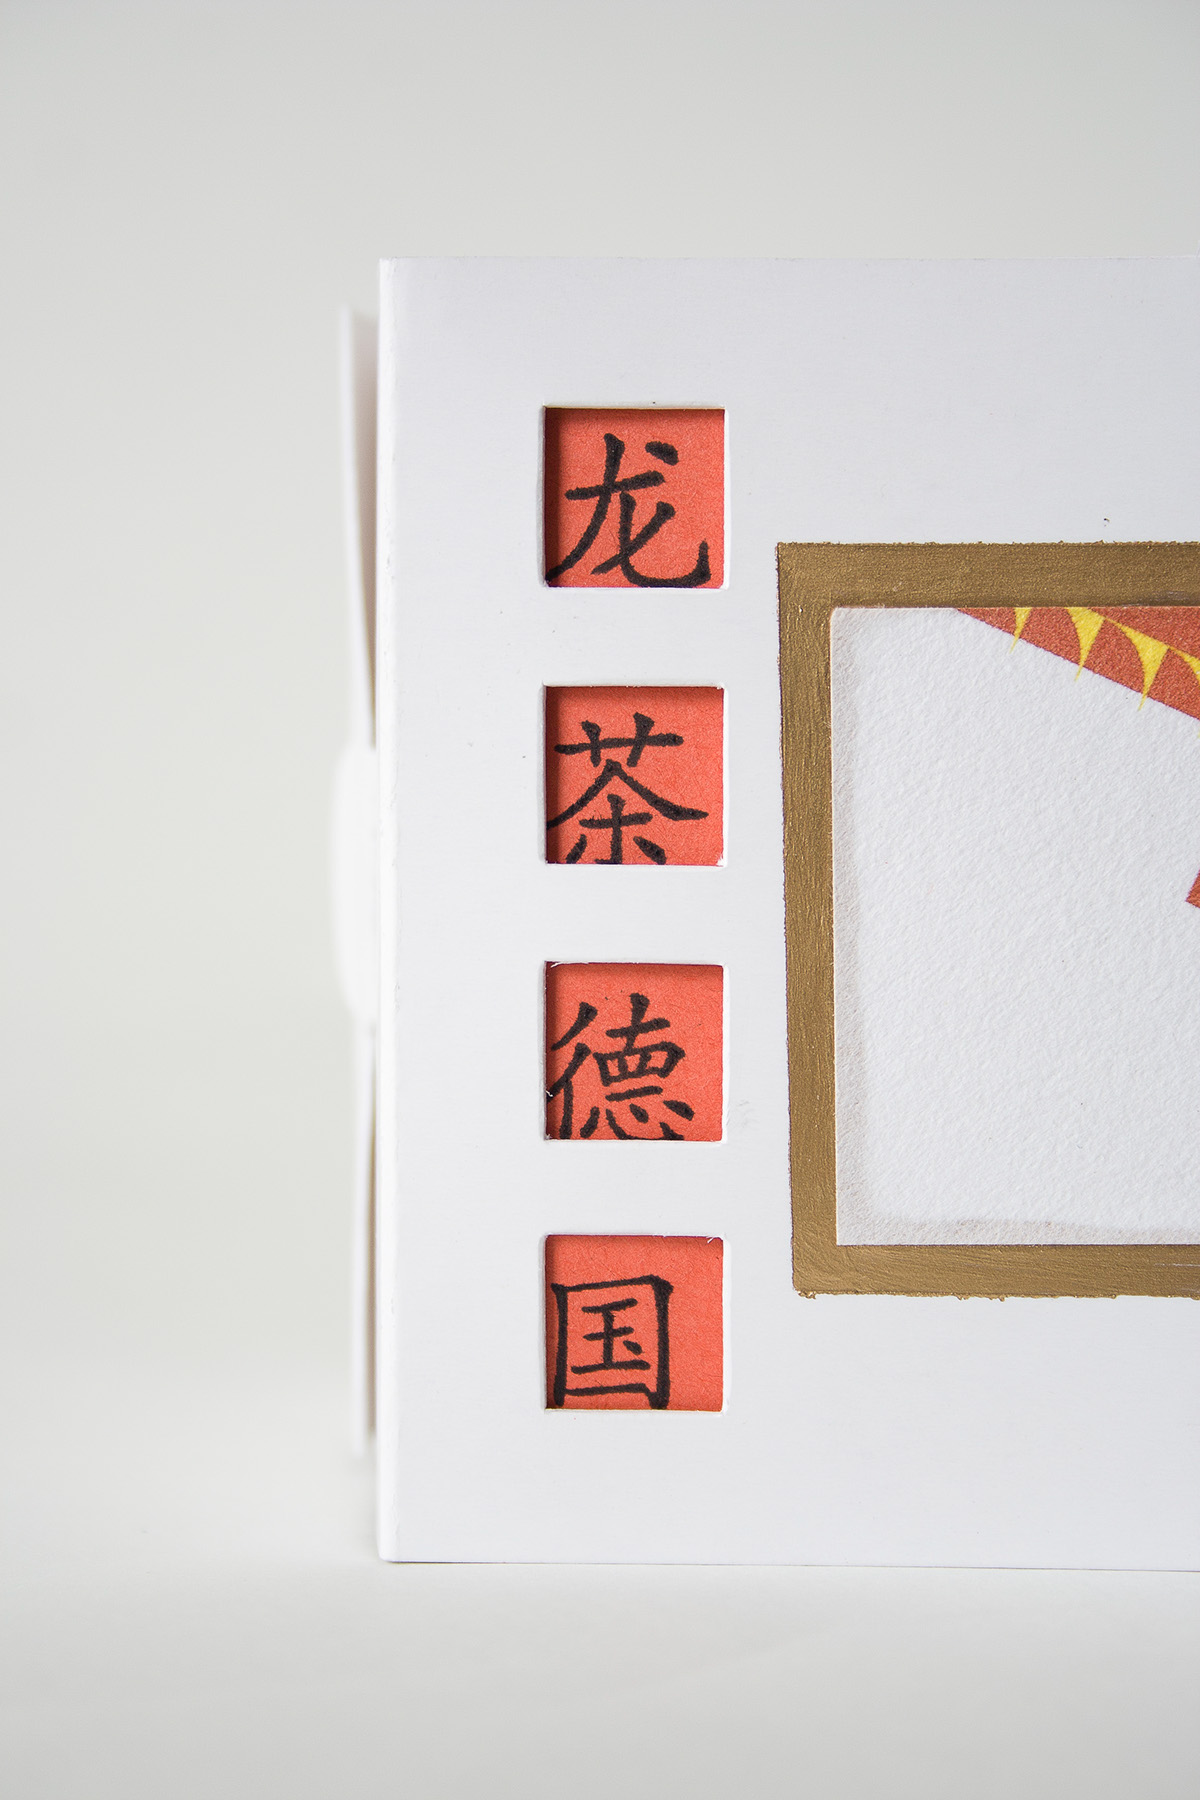 tea bauhaus dragon White chinese german mandarin gold round inventive interactive red angular